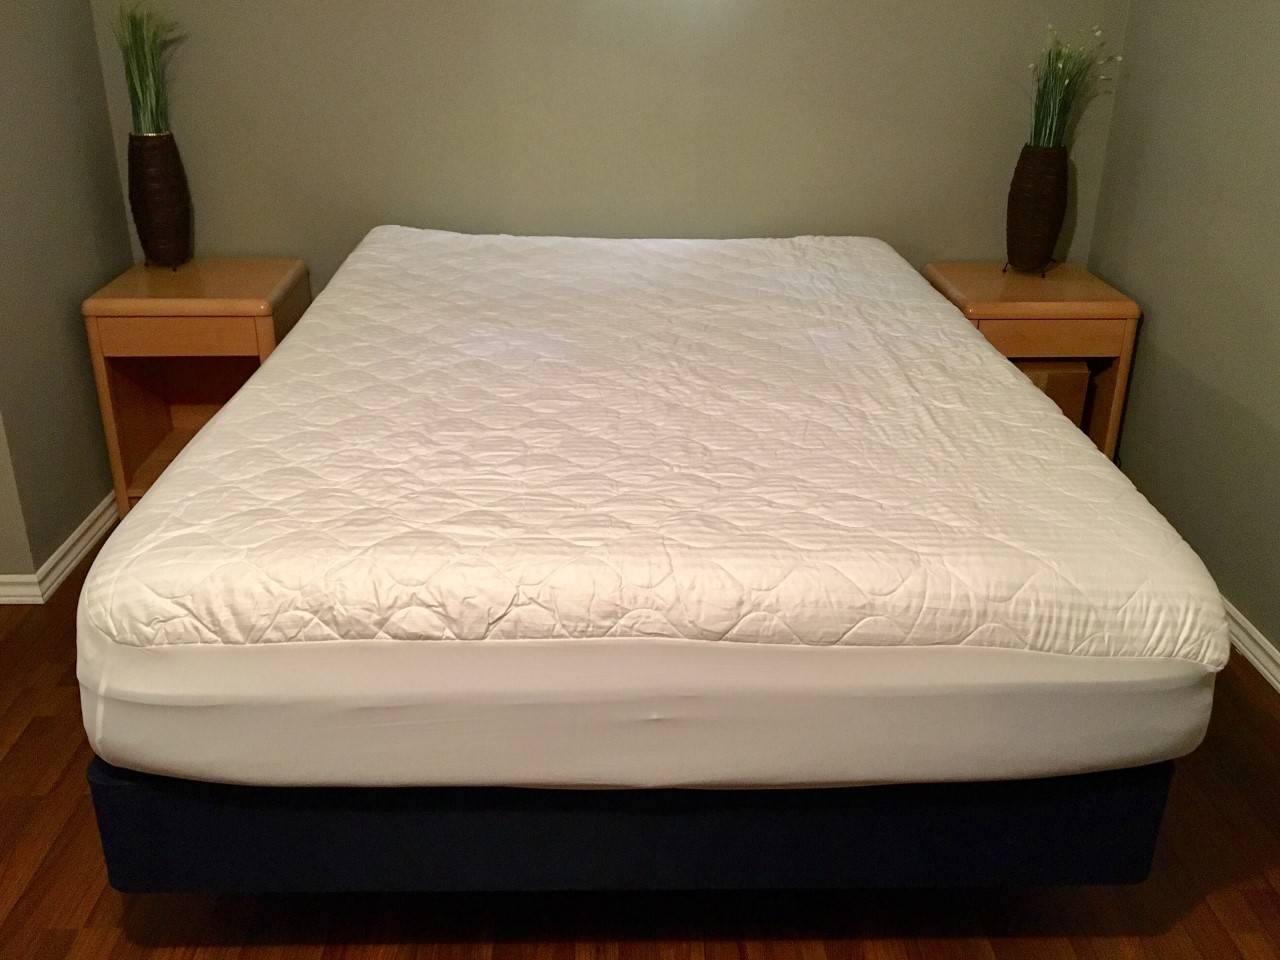 claritin mattress protector review